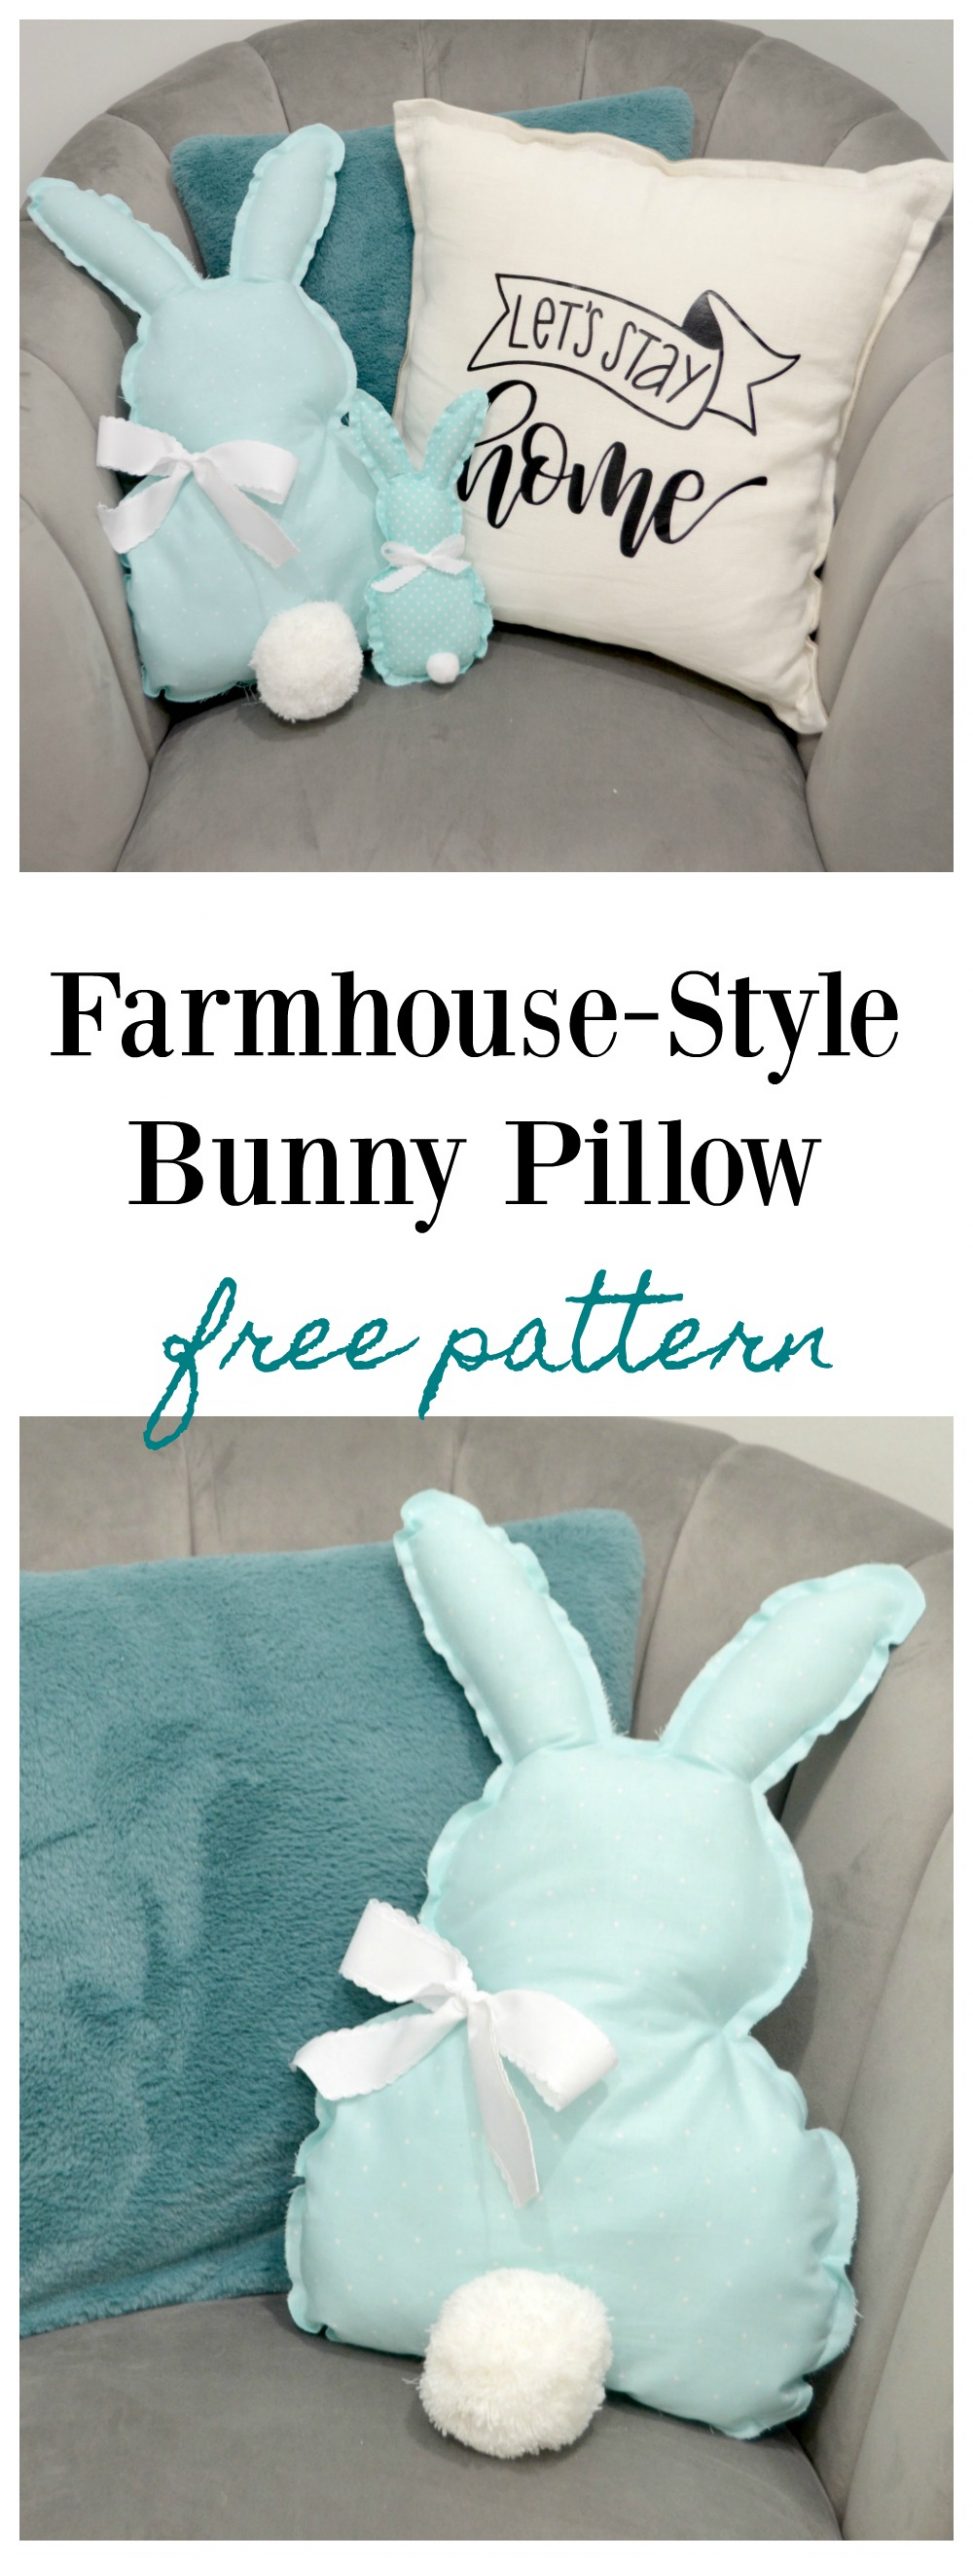 Farmhouse-Style Bunny Pillow